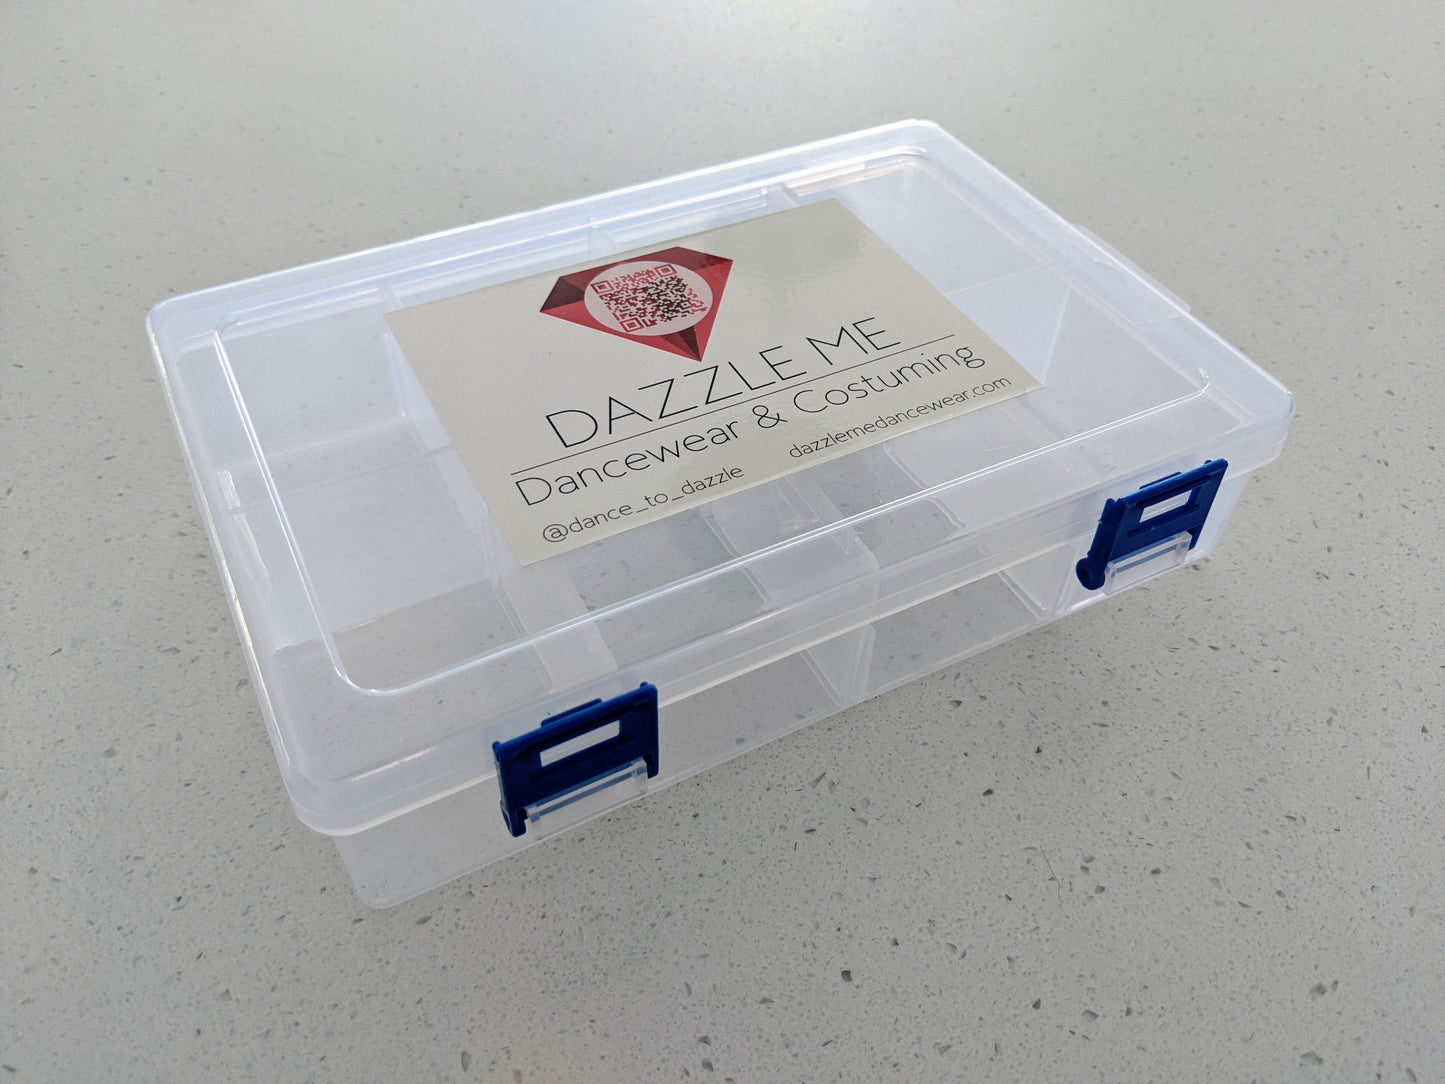 Dazzle Storage Box - Dazzle Me Dancewear